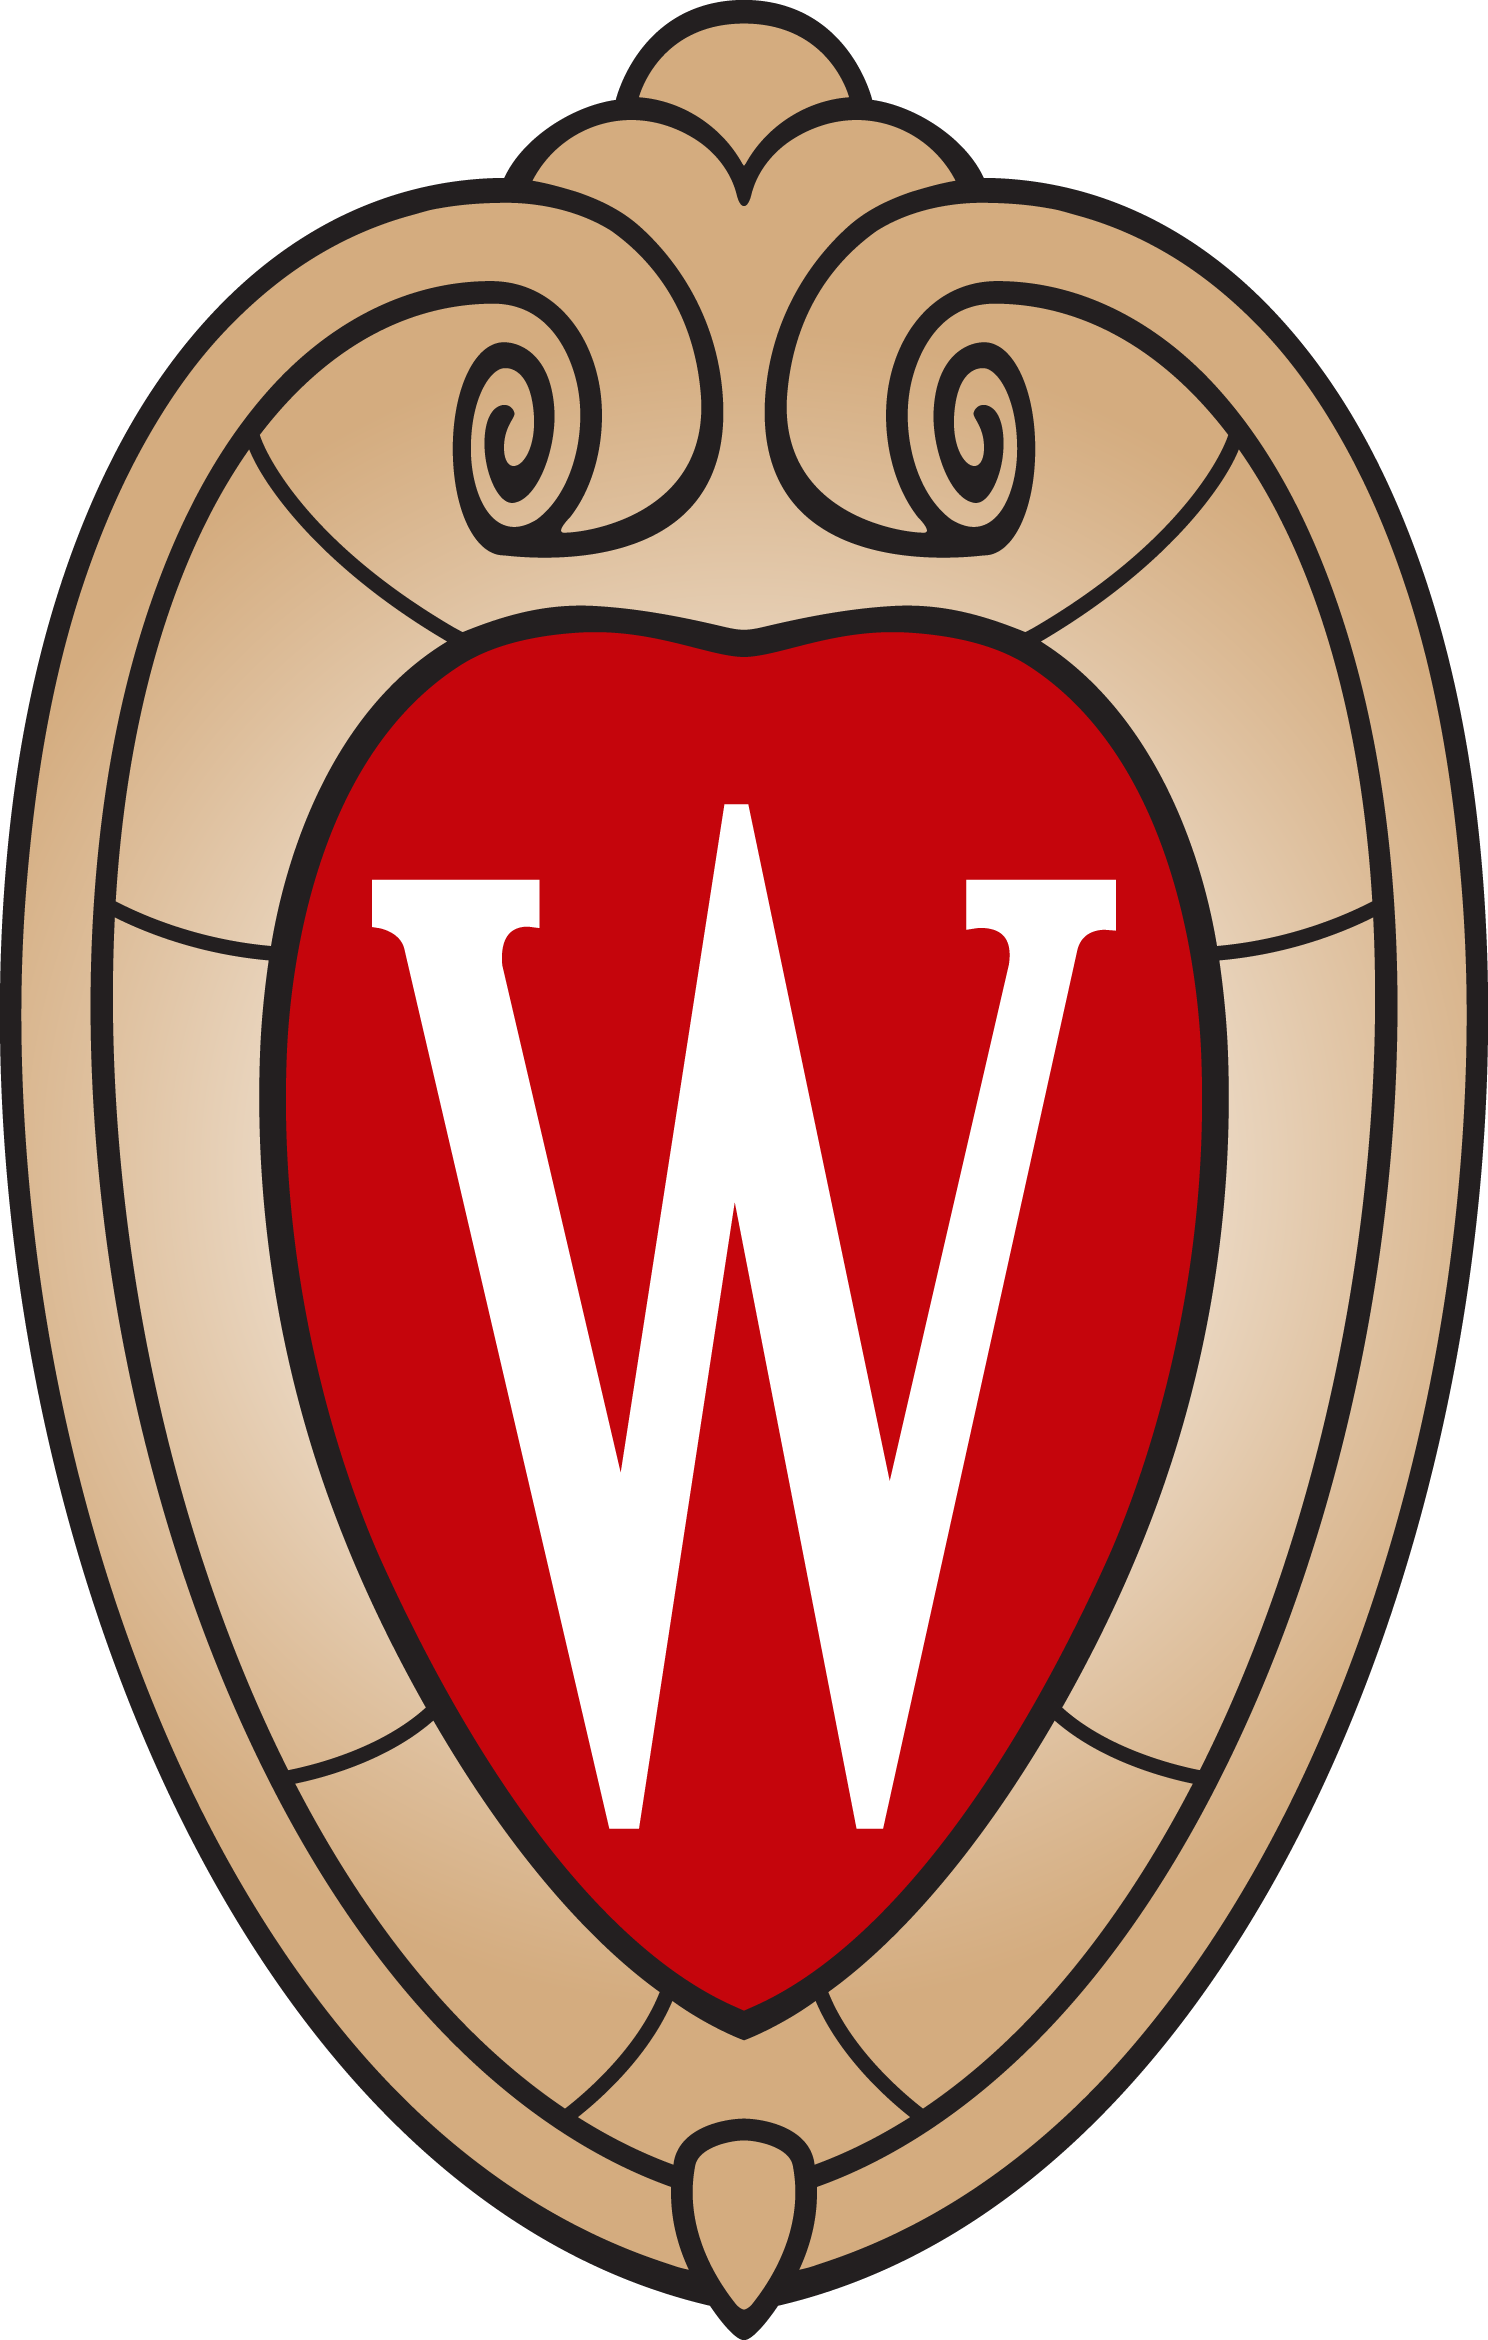 UW - University of Wisconsin-Madison - Висконсинский университет в Мадисоне